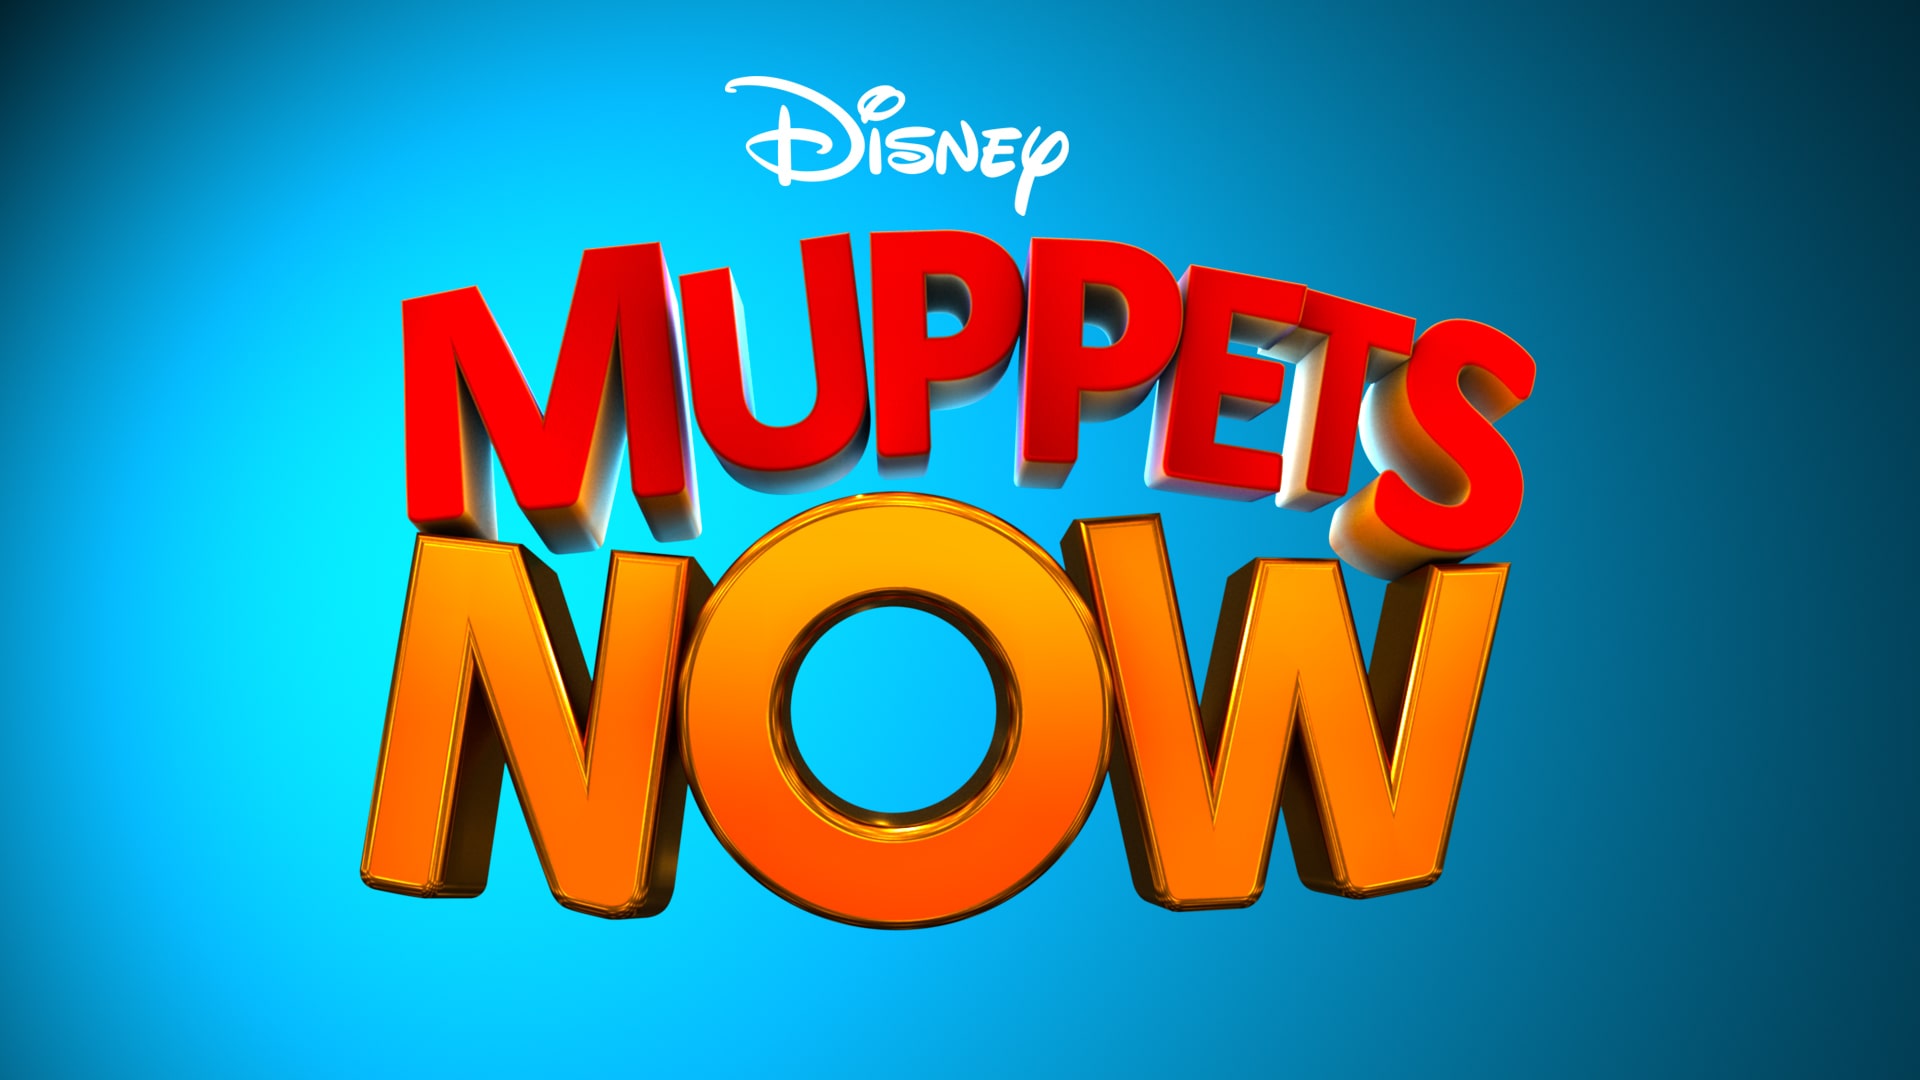 Disney+ announces new original series 'Muppets Now' premiering July 31, 2020